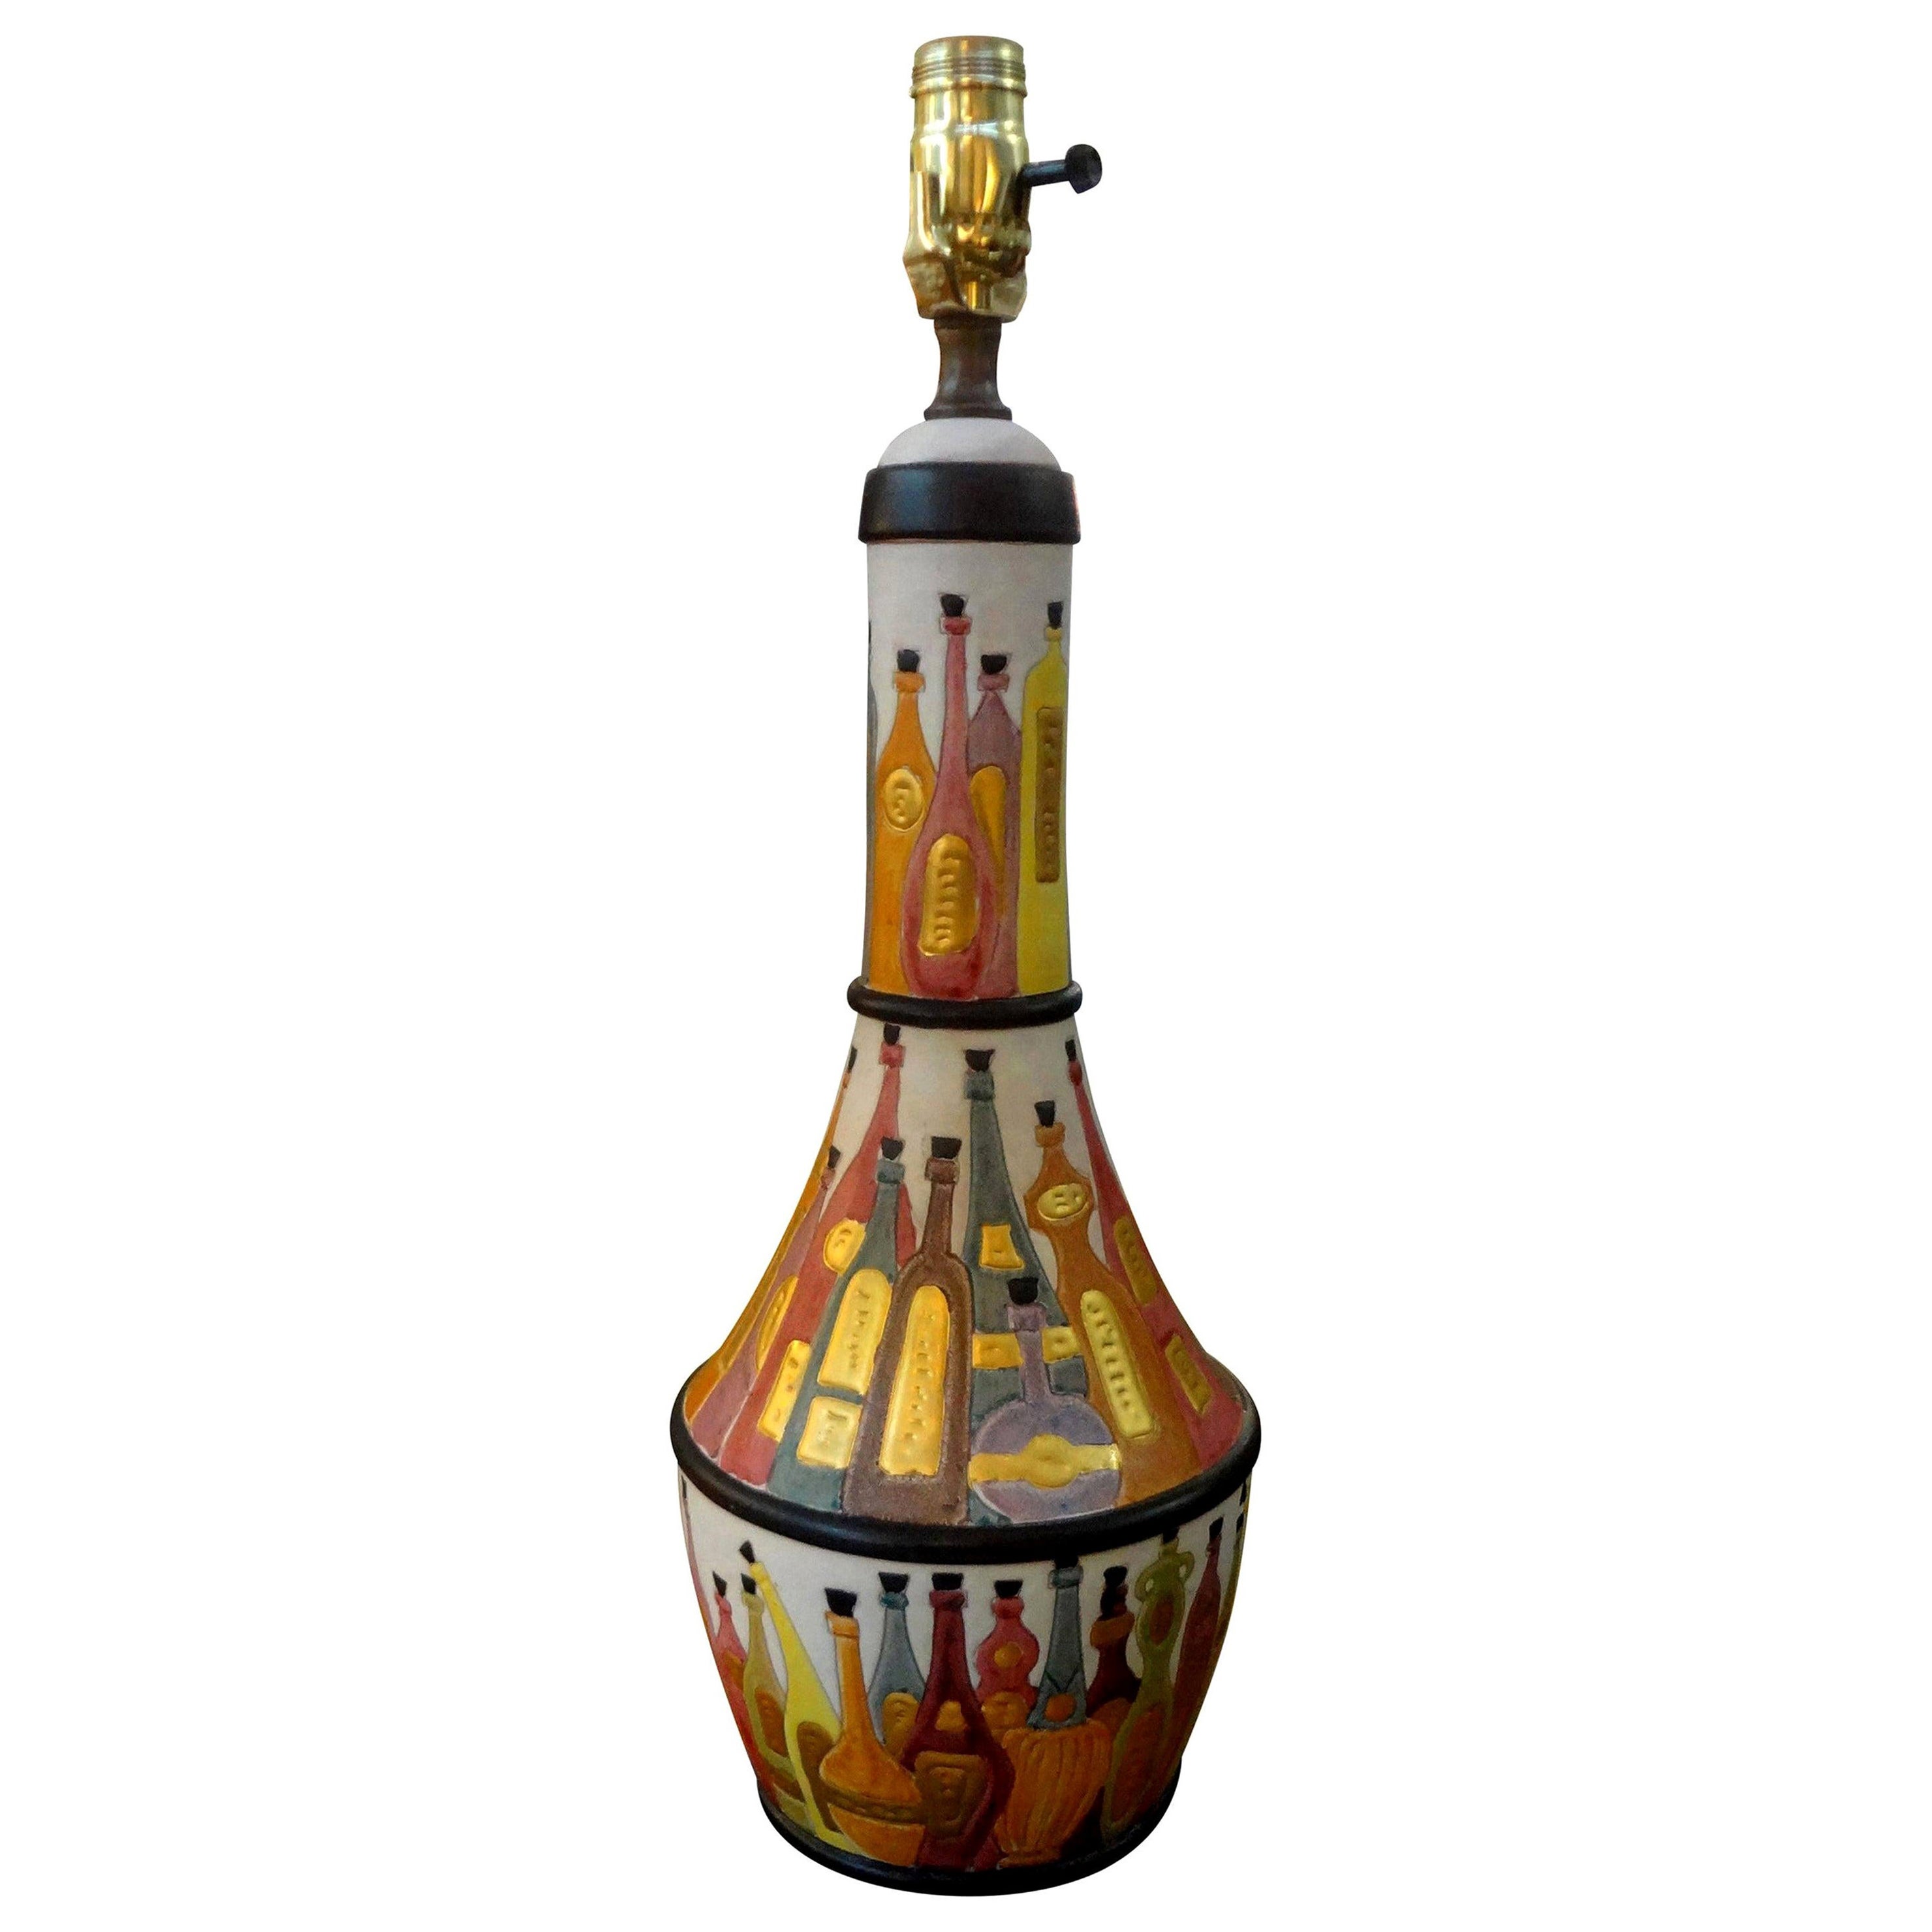 Italian Glazed Pottery Lamp with Wine Bottles